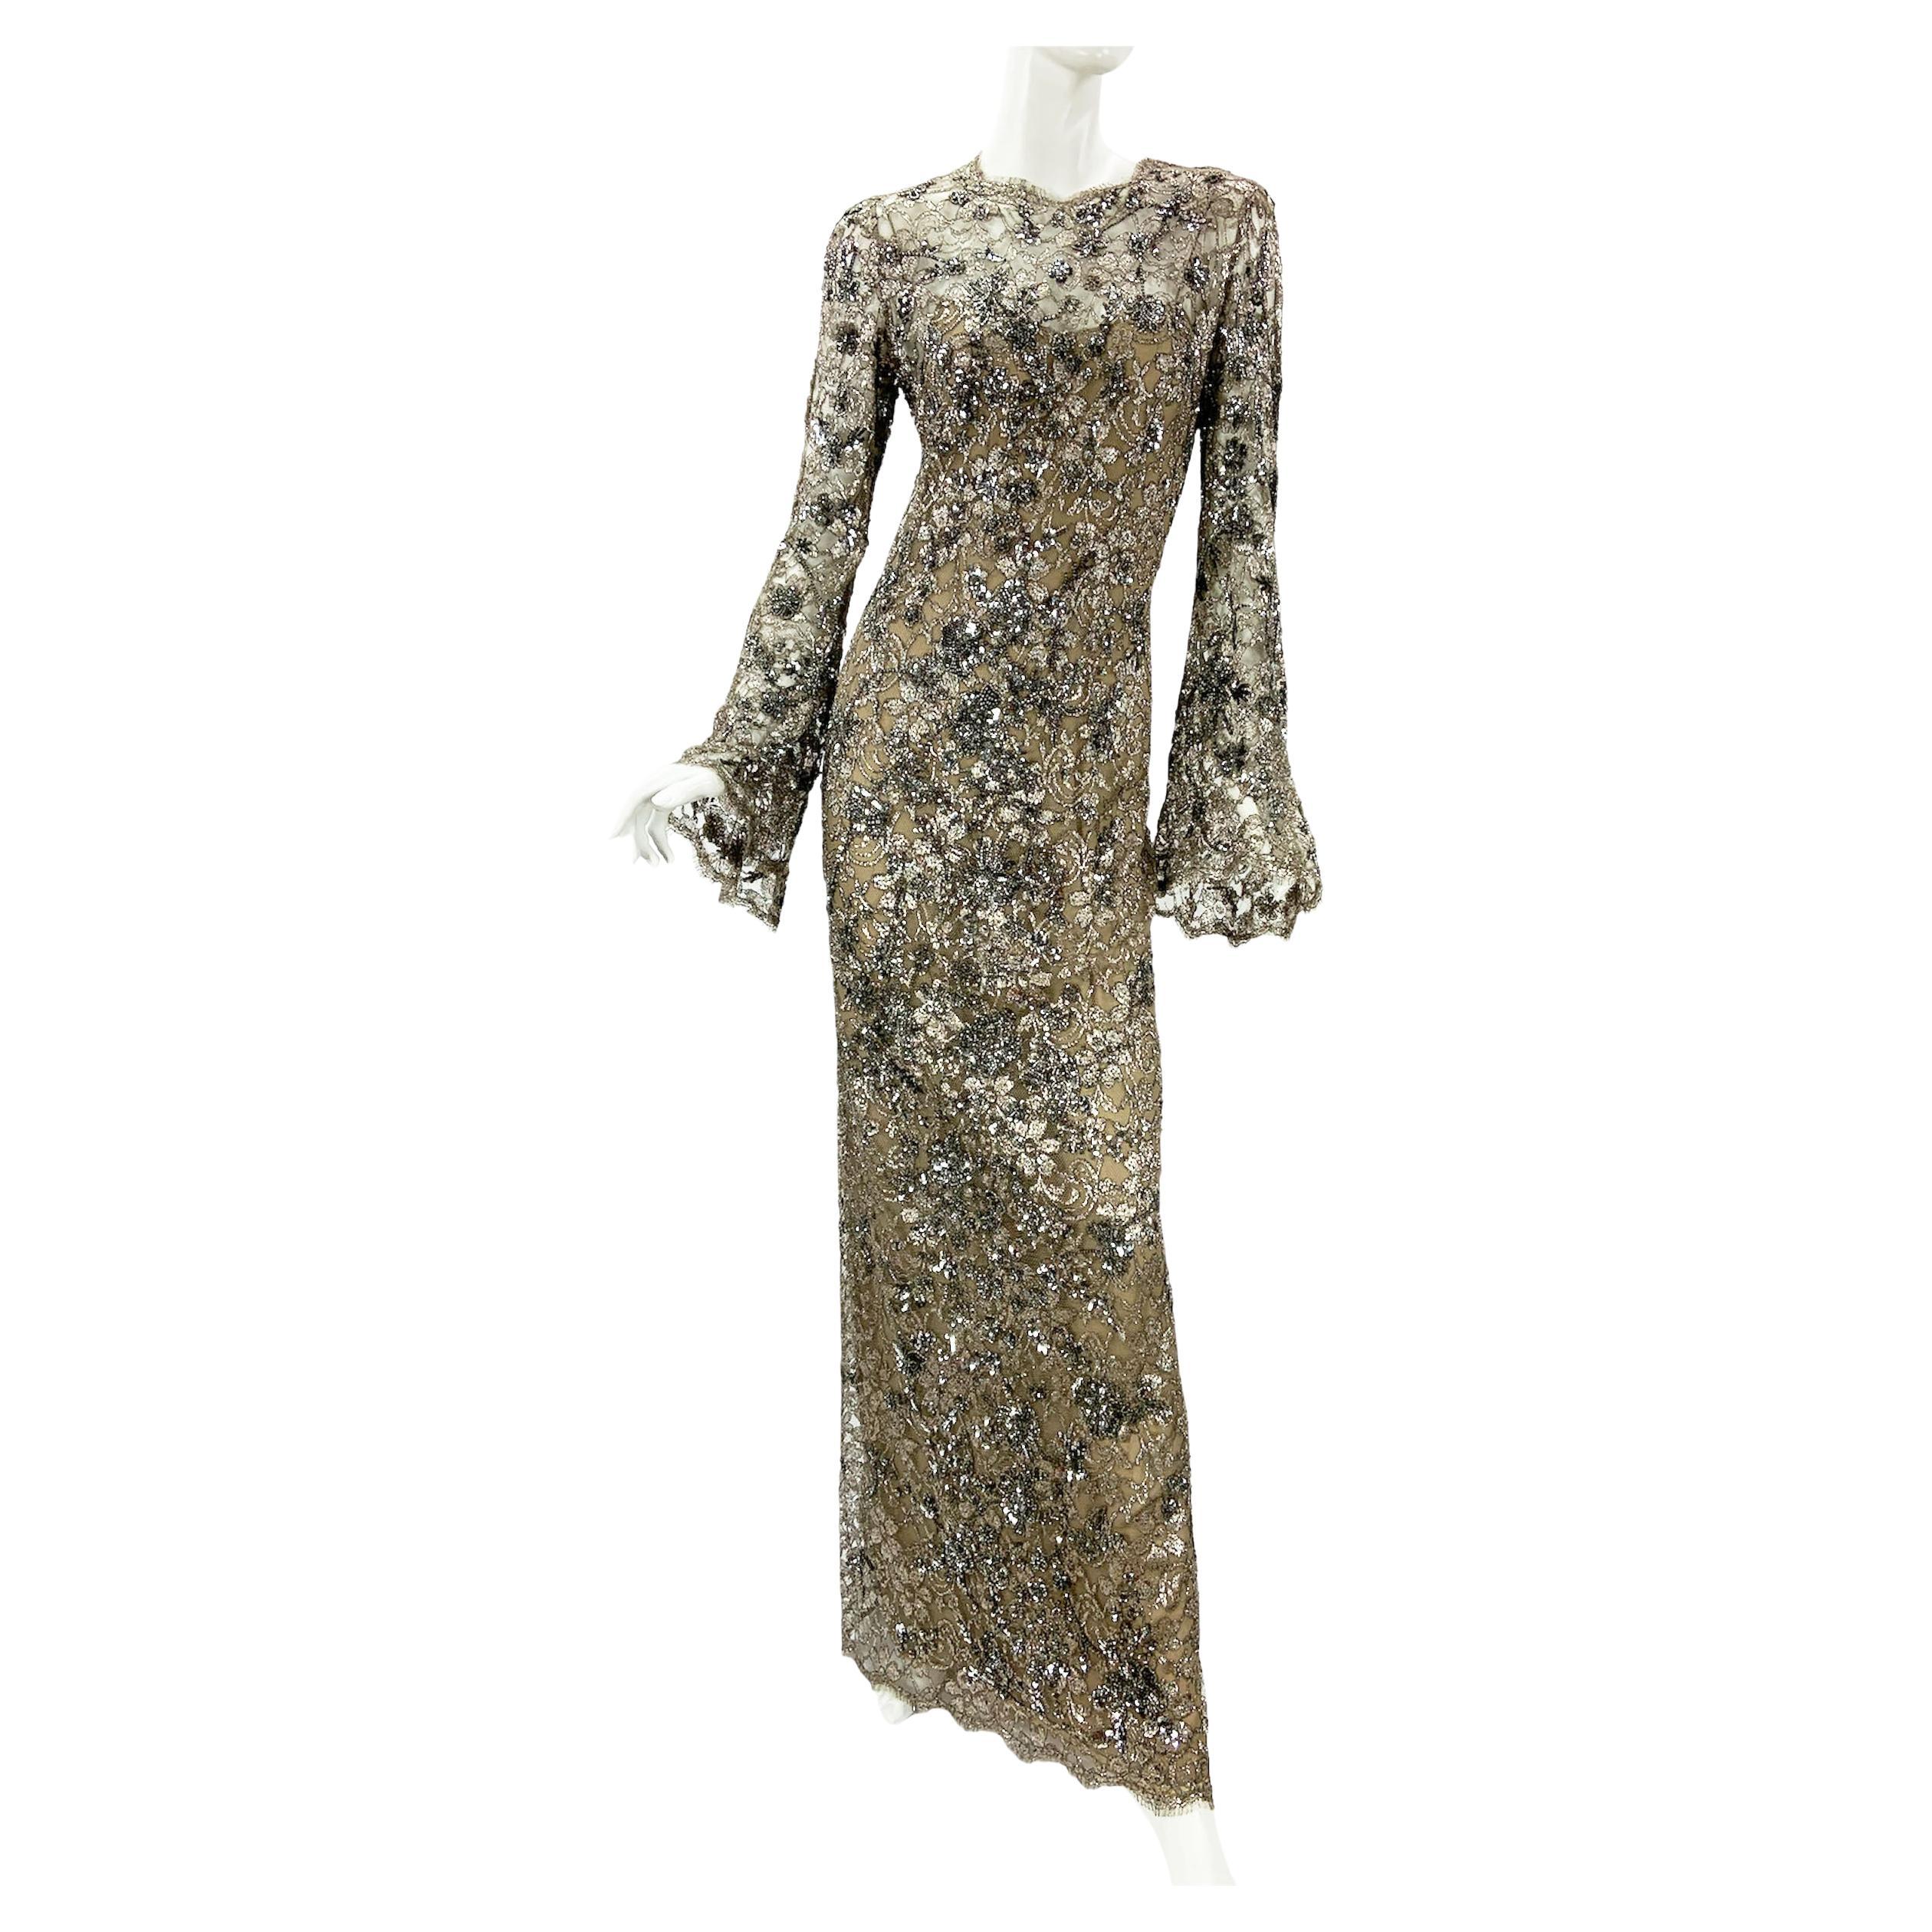 Vintage Oscar de la Renta Fully Embellished Smoky Gray Lace Dress Gown 